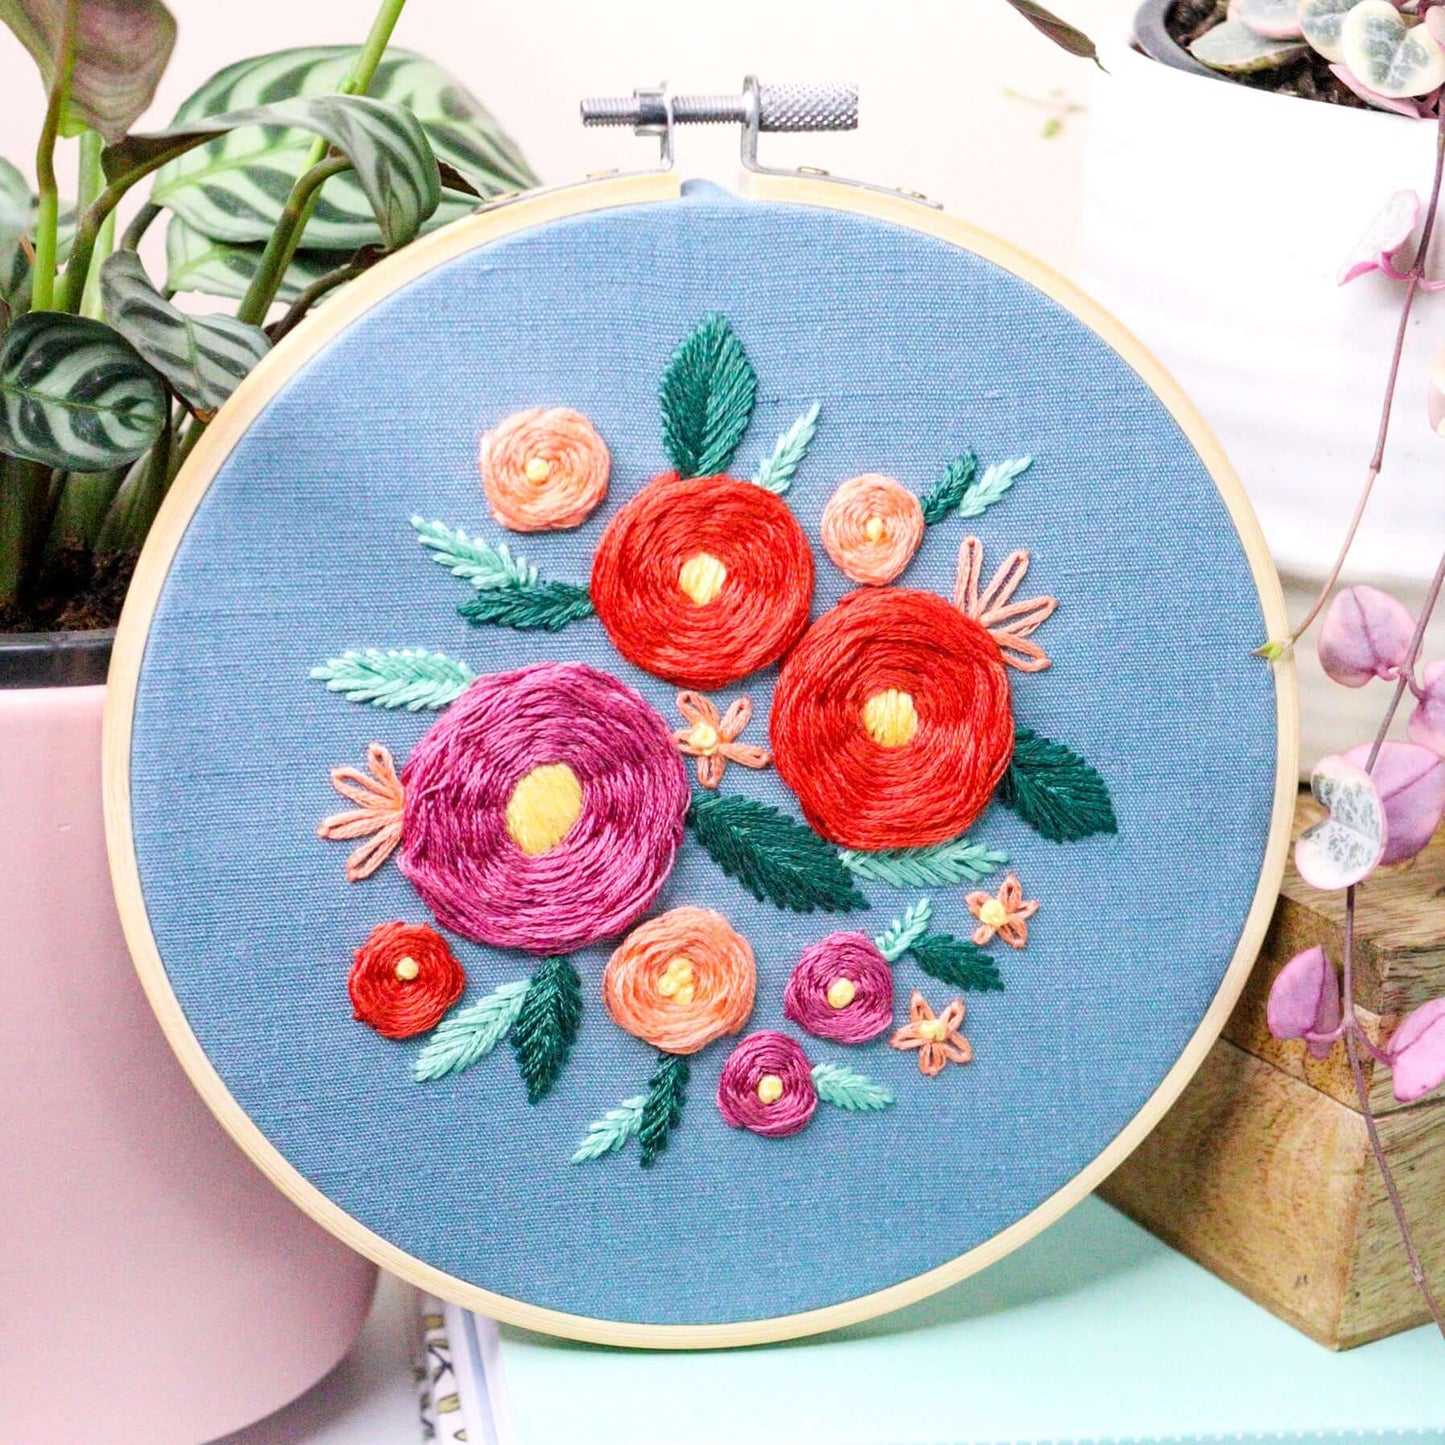 Rose Garden Modern Embroidery Kit - Craft Make Do